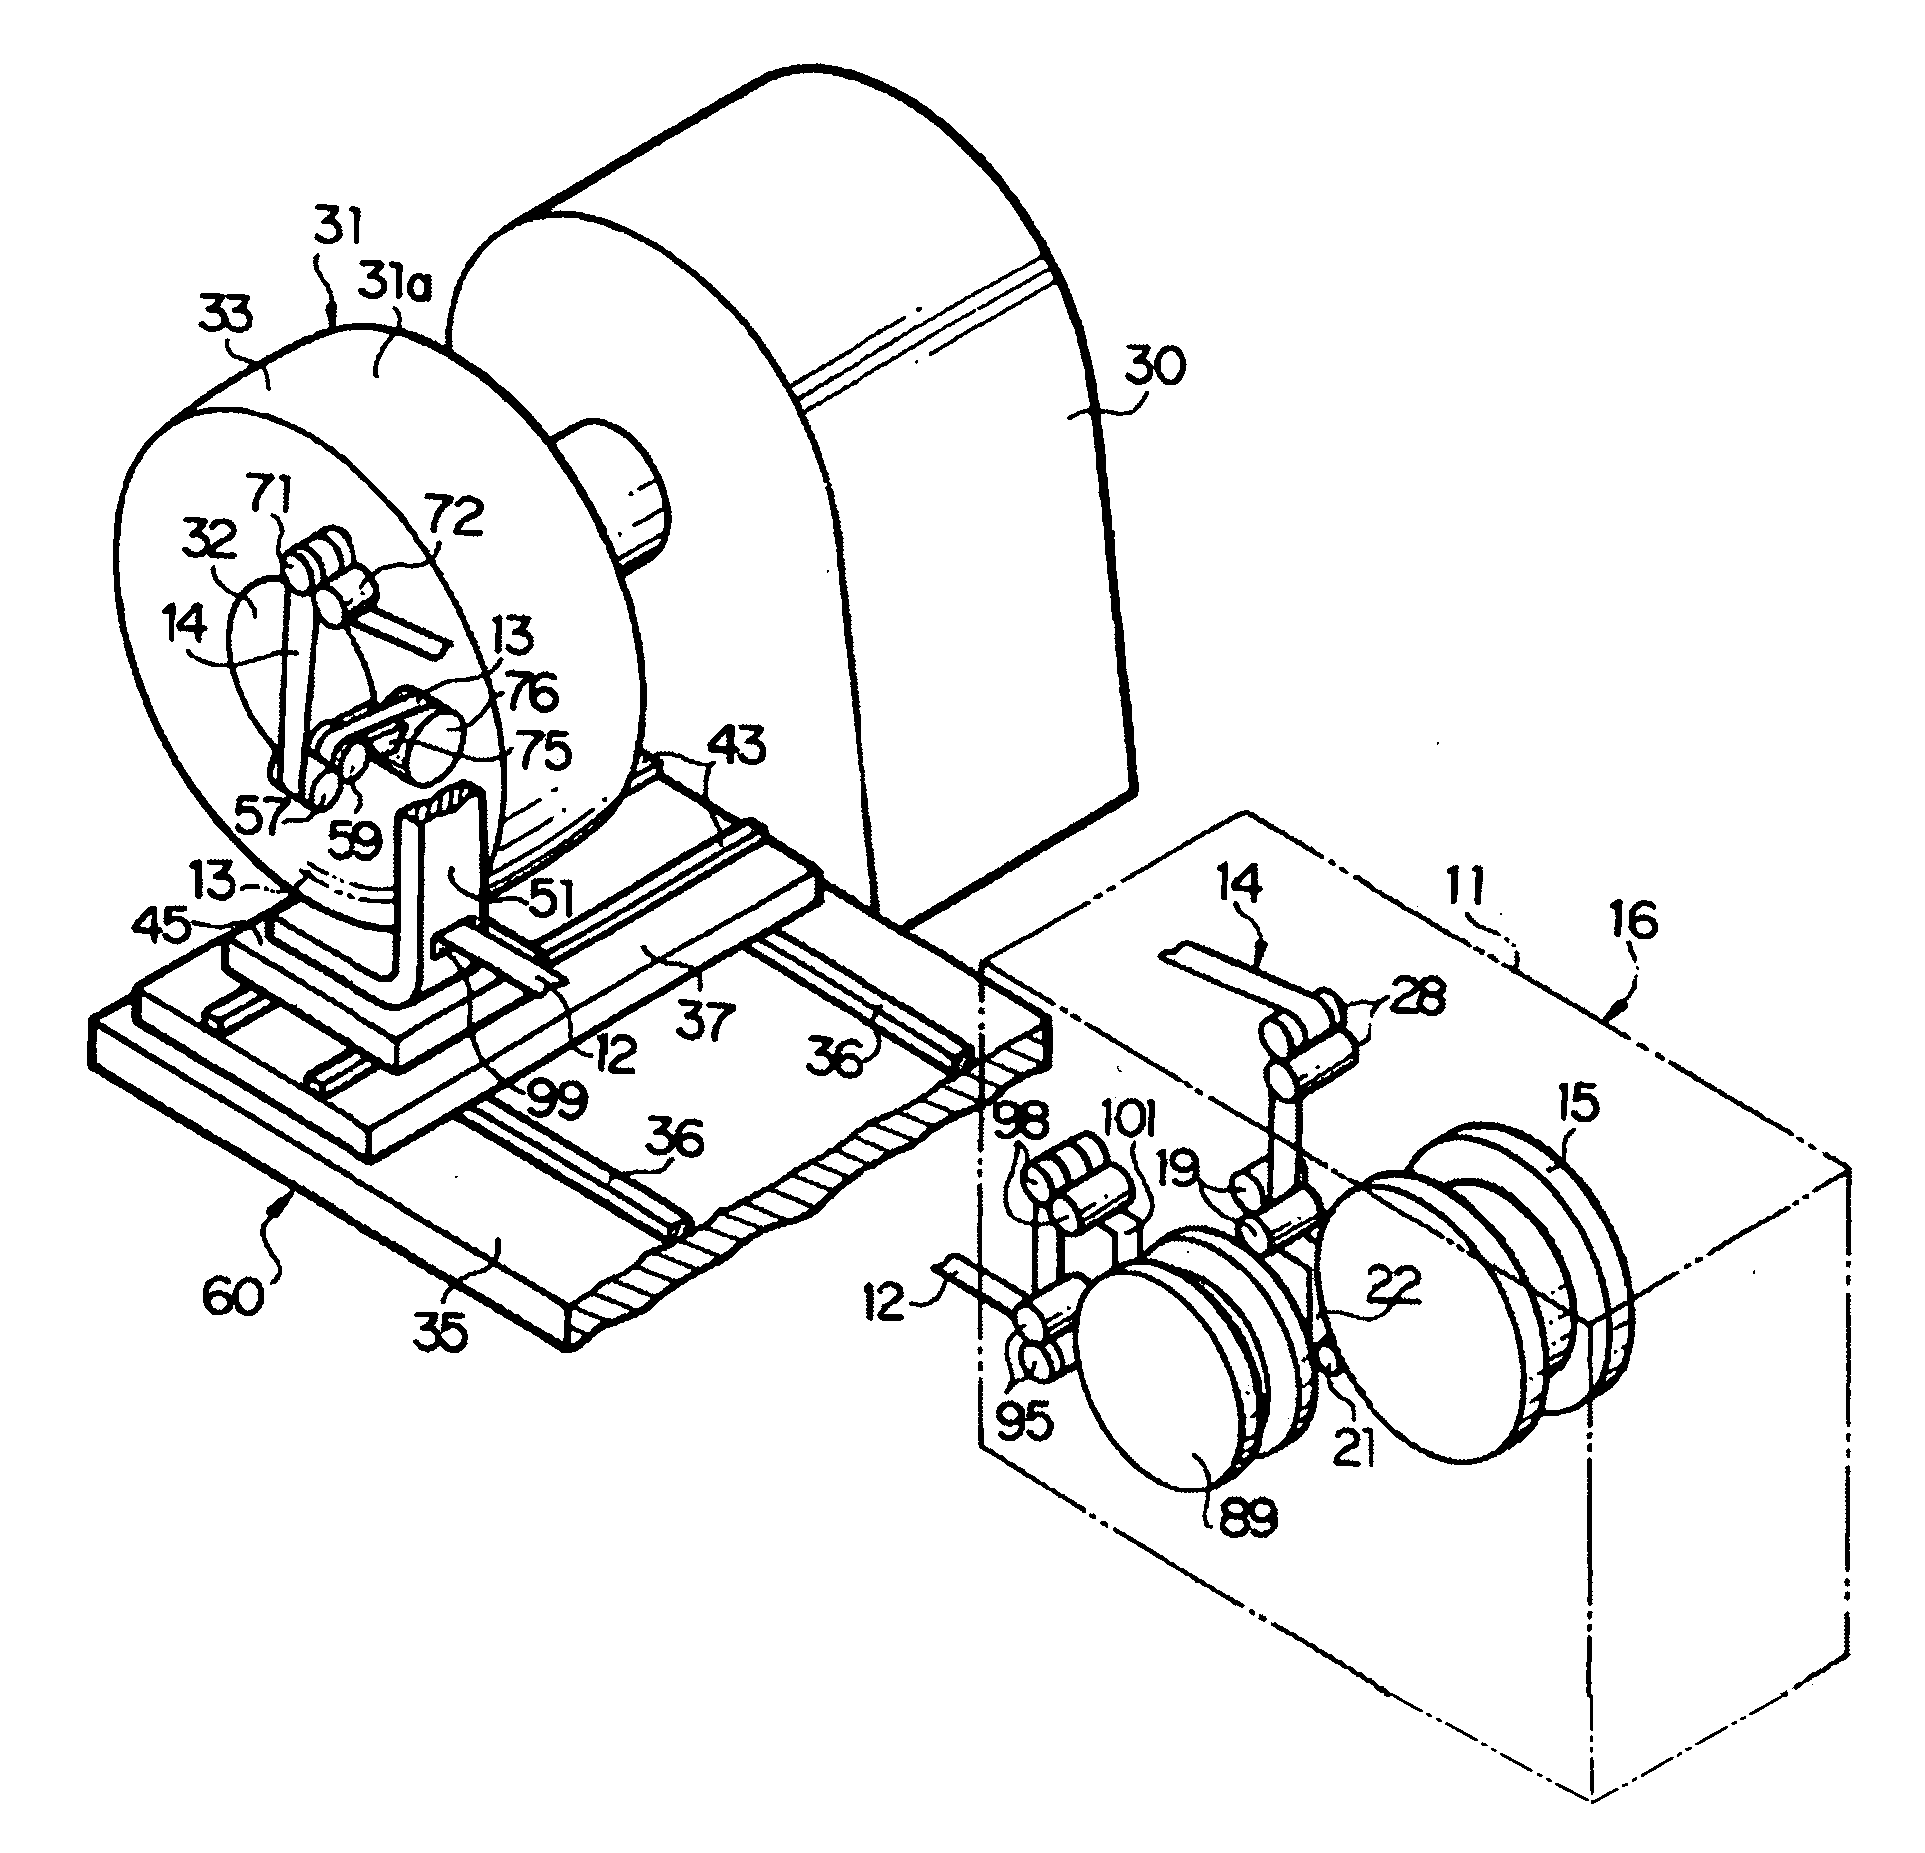 Method and apparatus for manufacturing unvulcanized tires